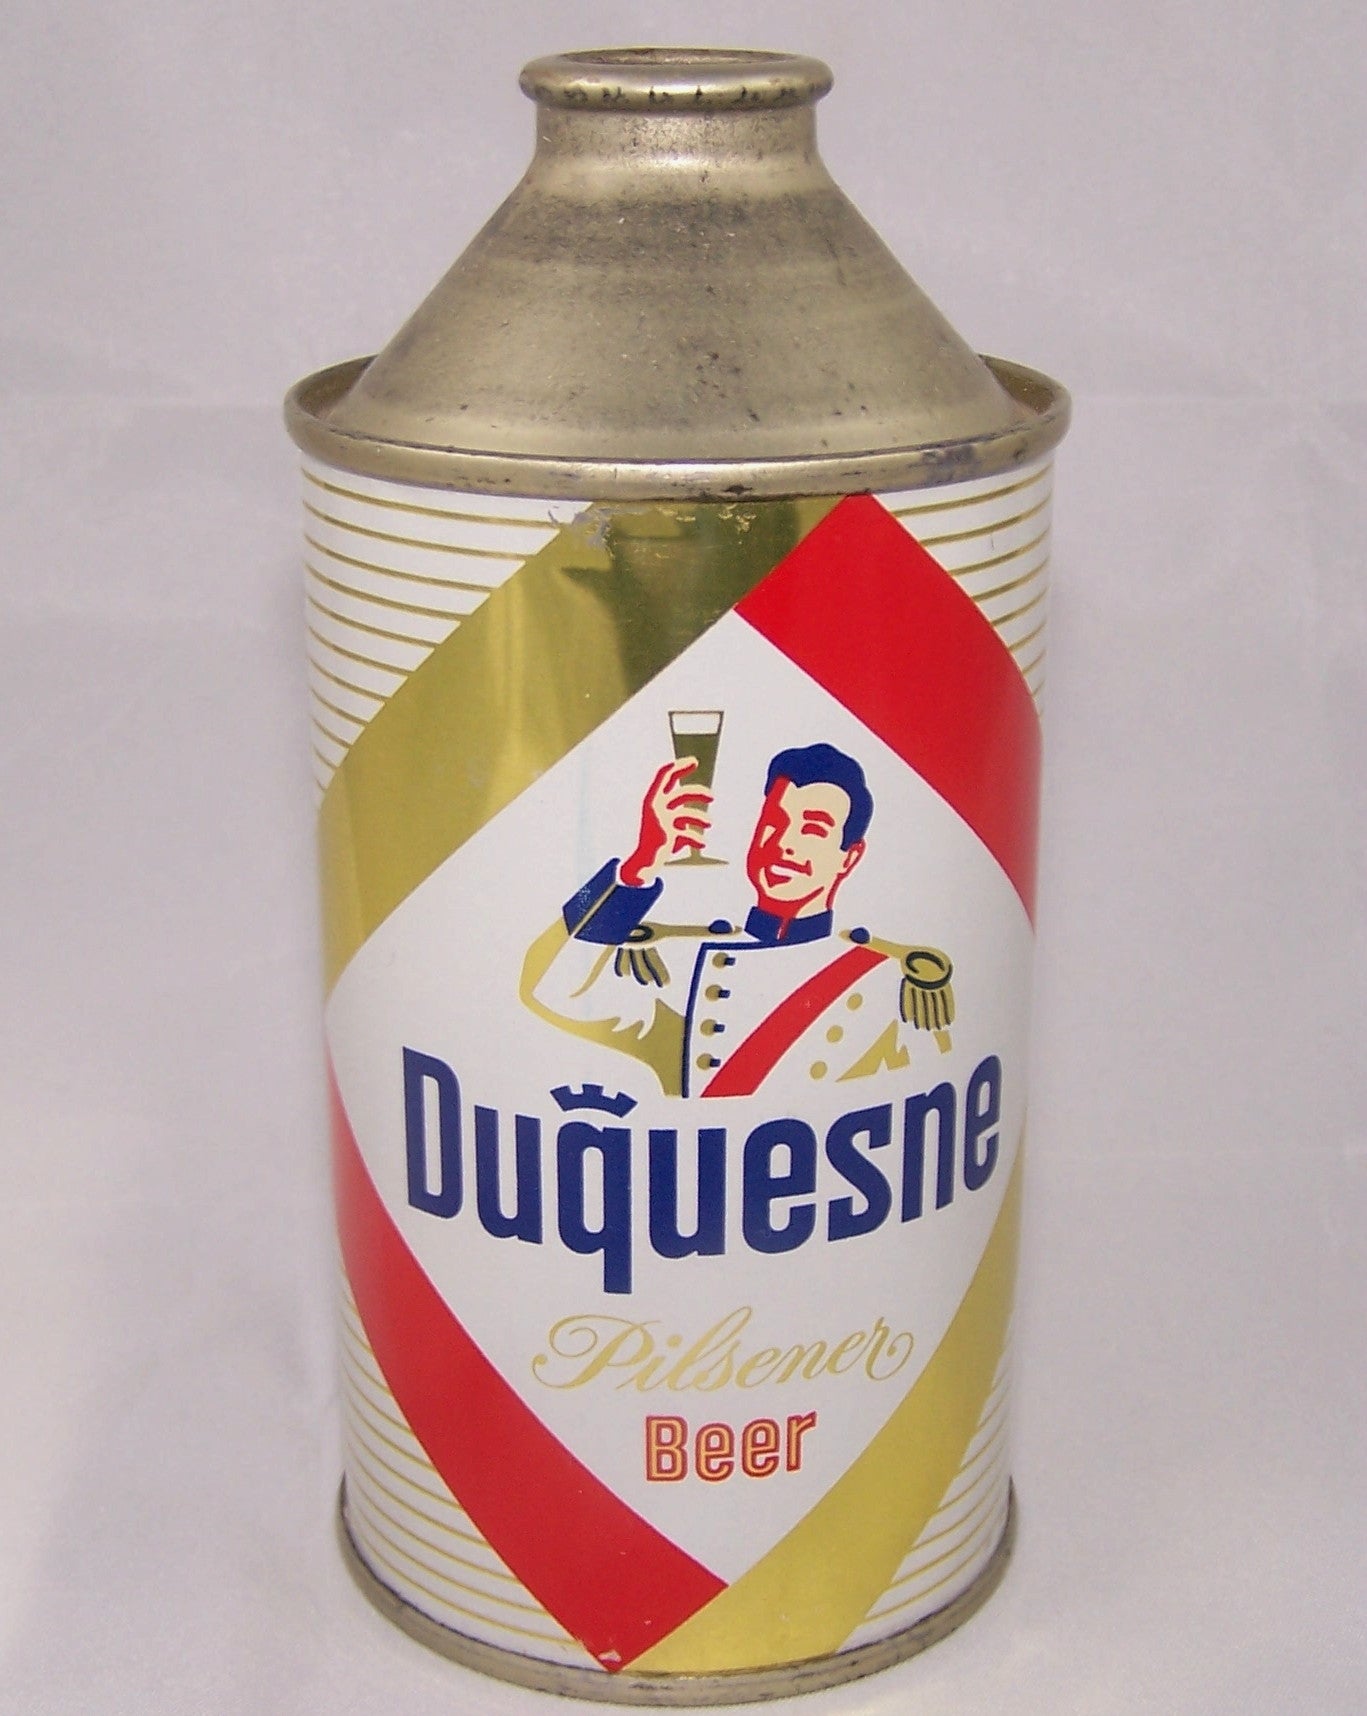 Duquesne Pilsener Beer, USBC 160-3, Grade A1+ Sold on 04/27/18